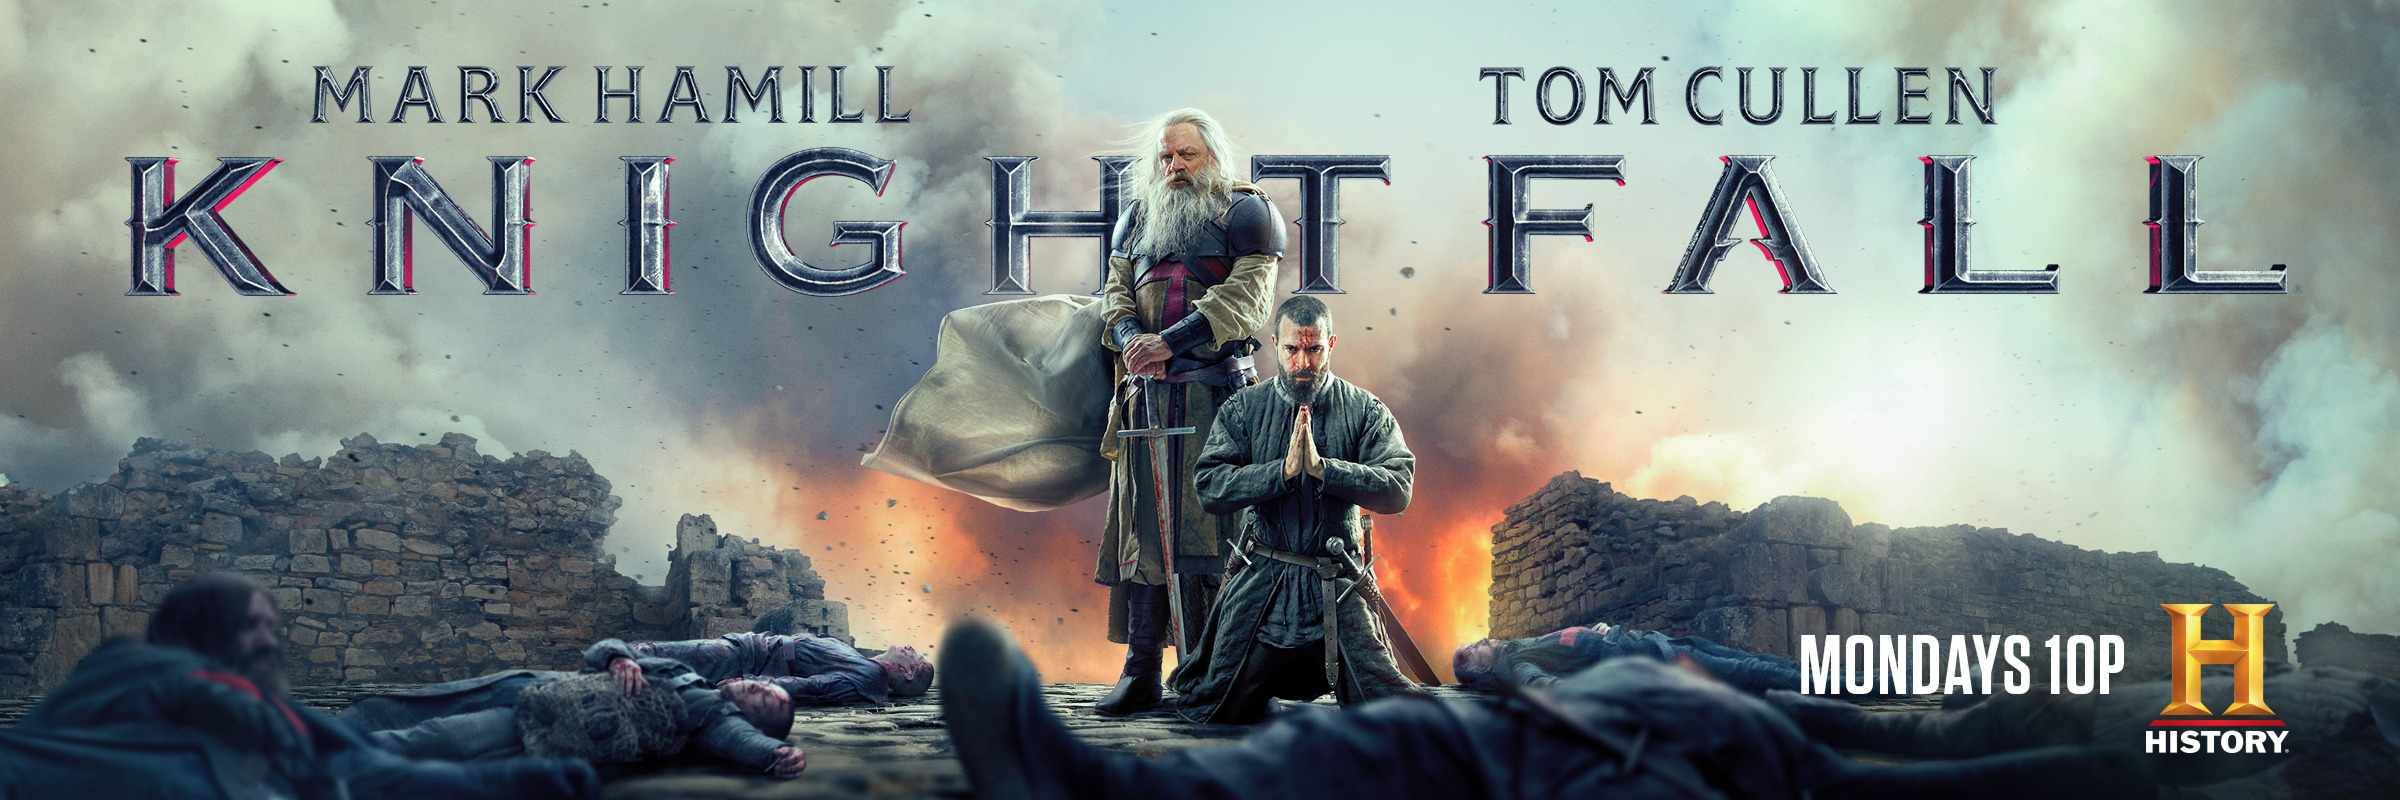 Mega Sized TV Poster Image for Knightfall (#5 of 5)